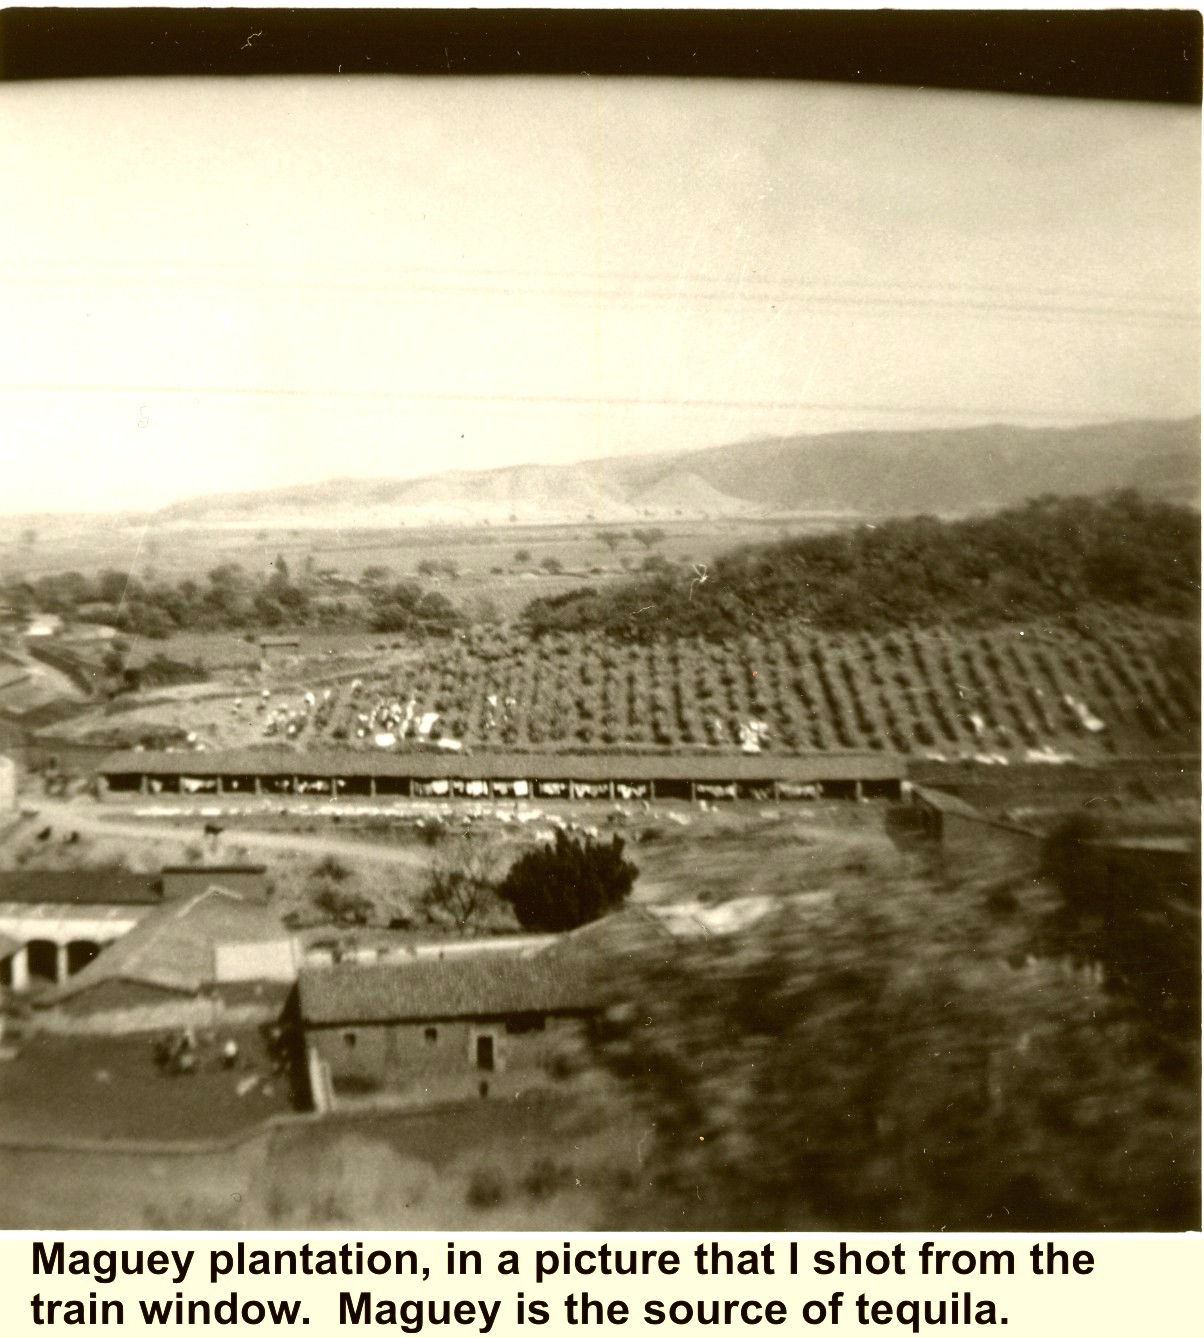 Maguey plantation